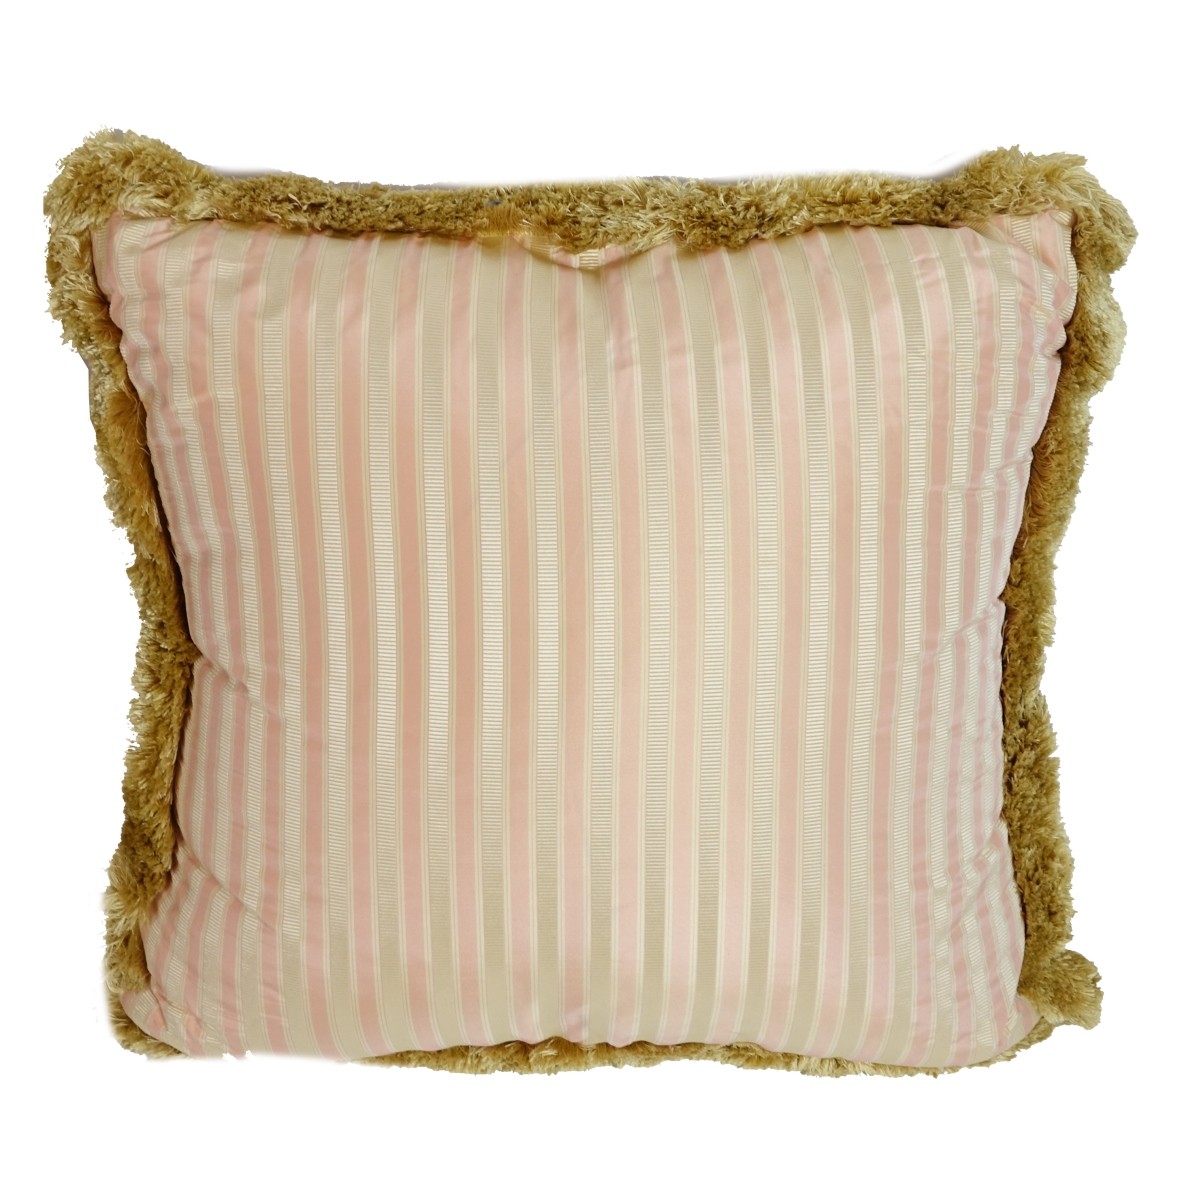 Pair of Scalamandre Silk Pillows